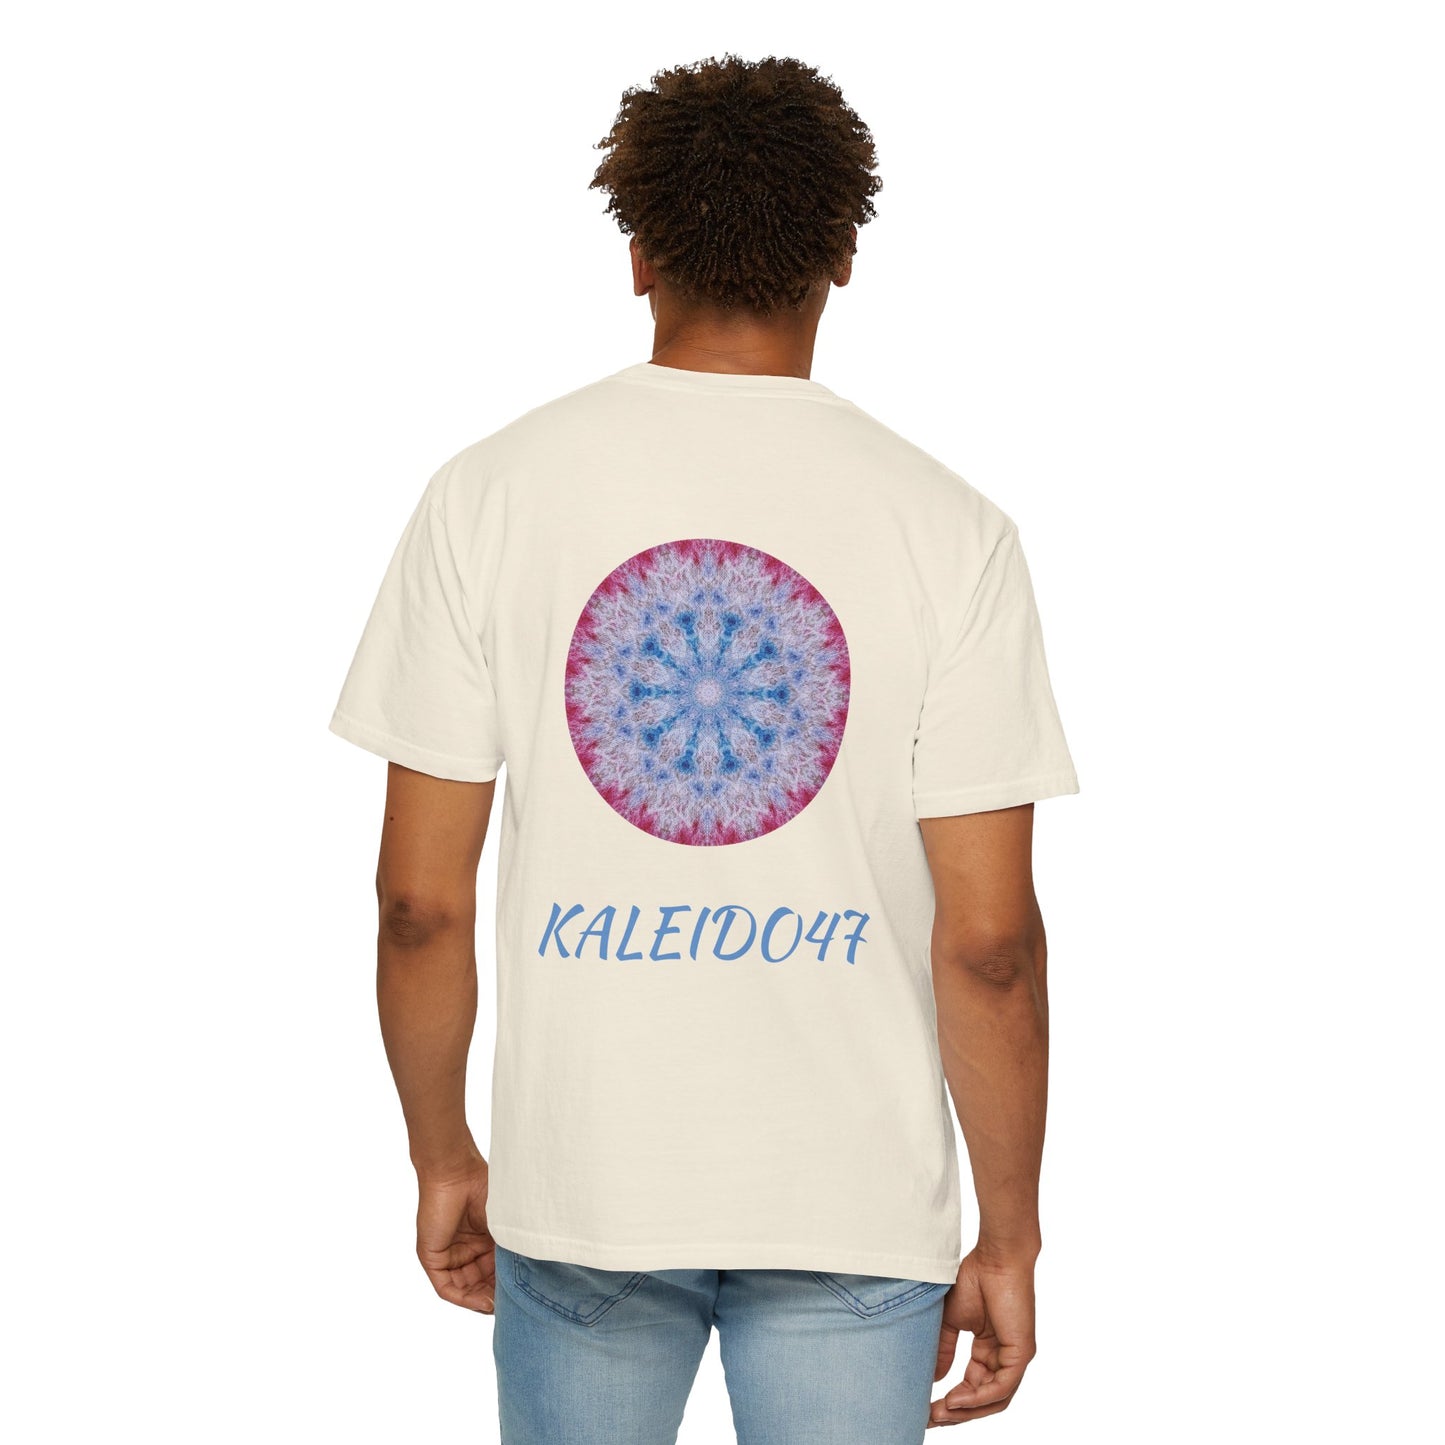 Men's K47 Cymatic Prt T Shirt [ASCNTN]